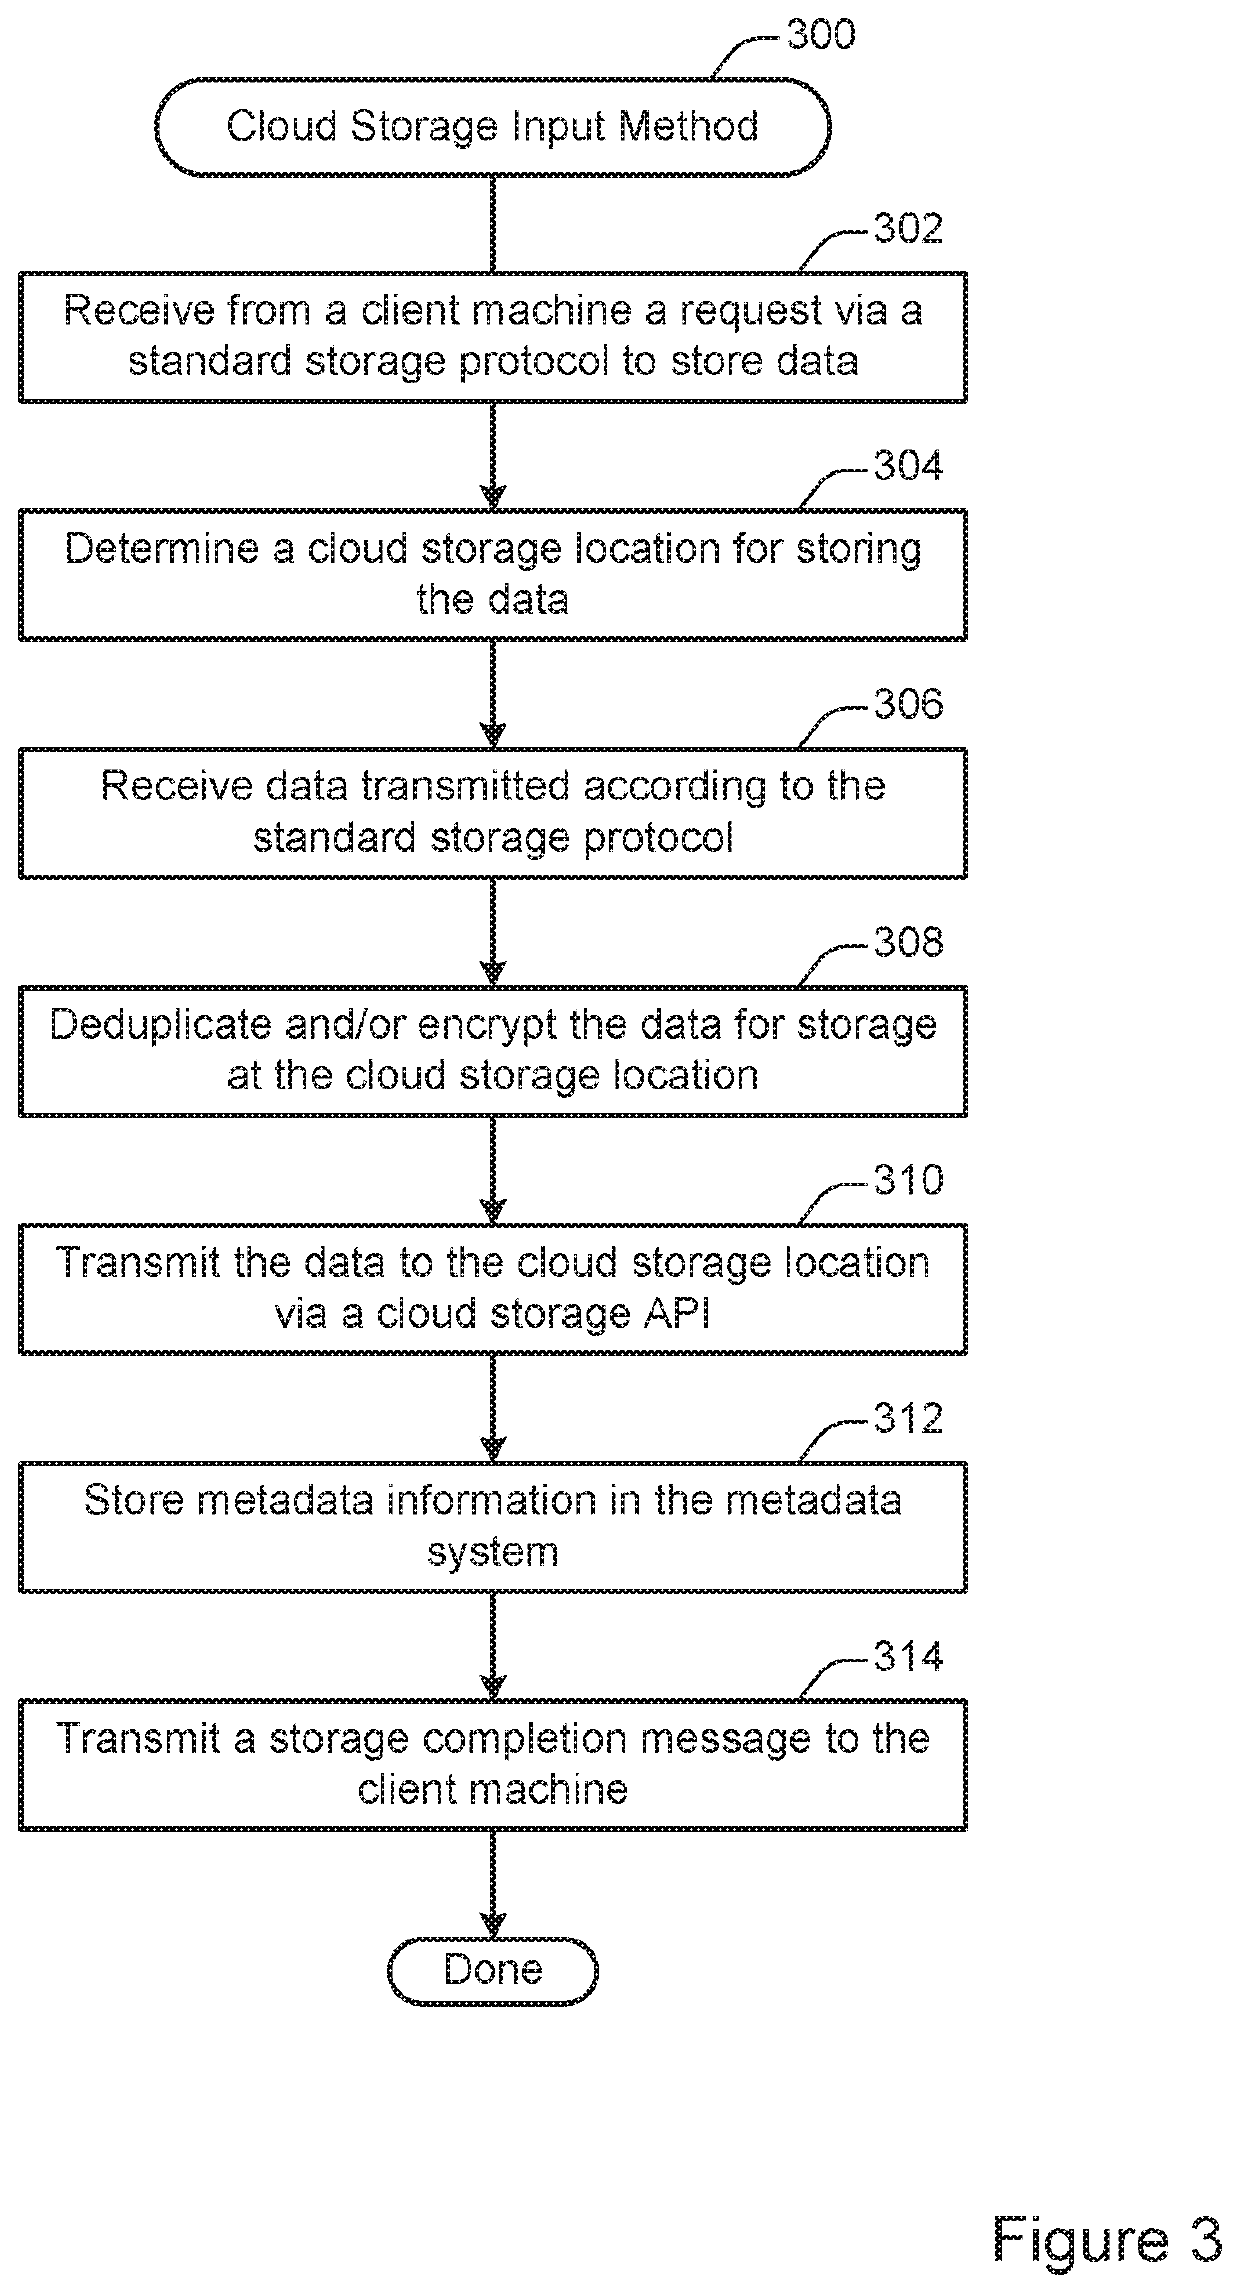 Data management across cloud storage providers